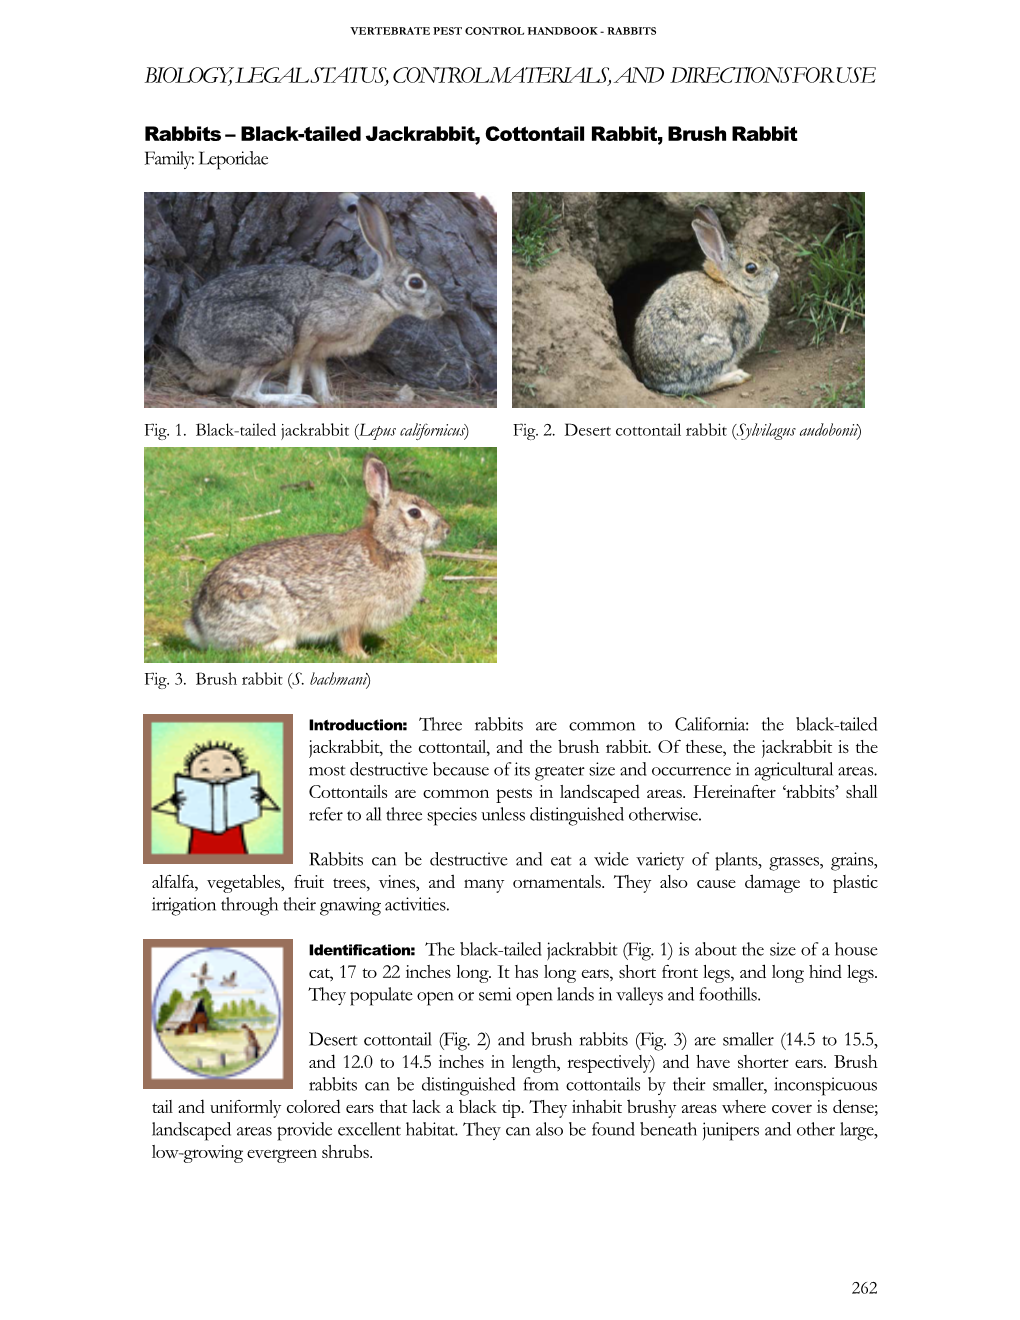 Black-Tailed Jackrabbit, Cottontail Rabbit, Brush Rabbit Family: Leporidae